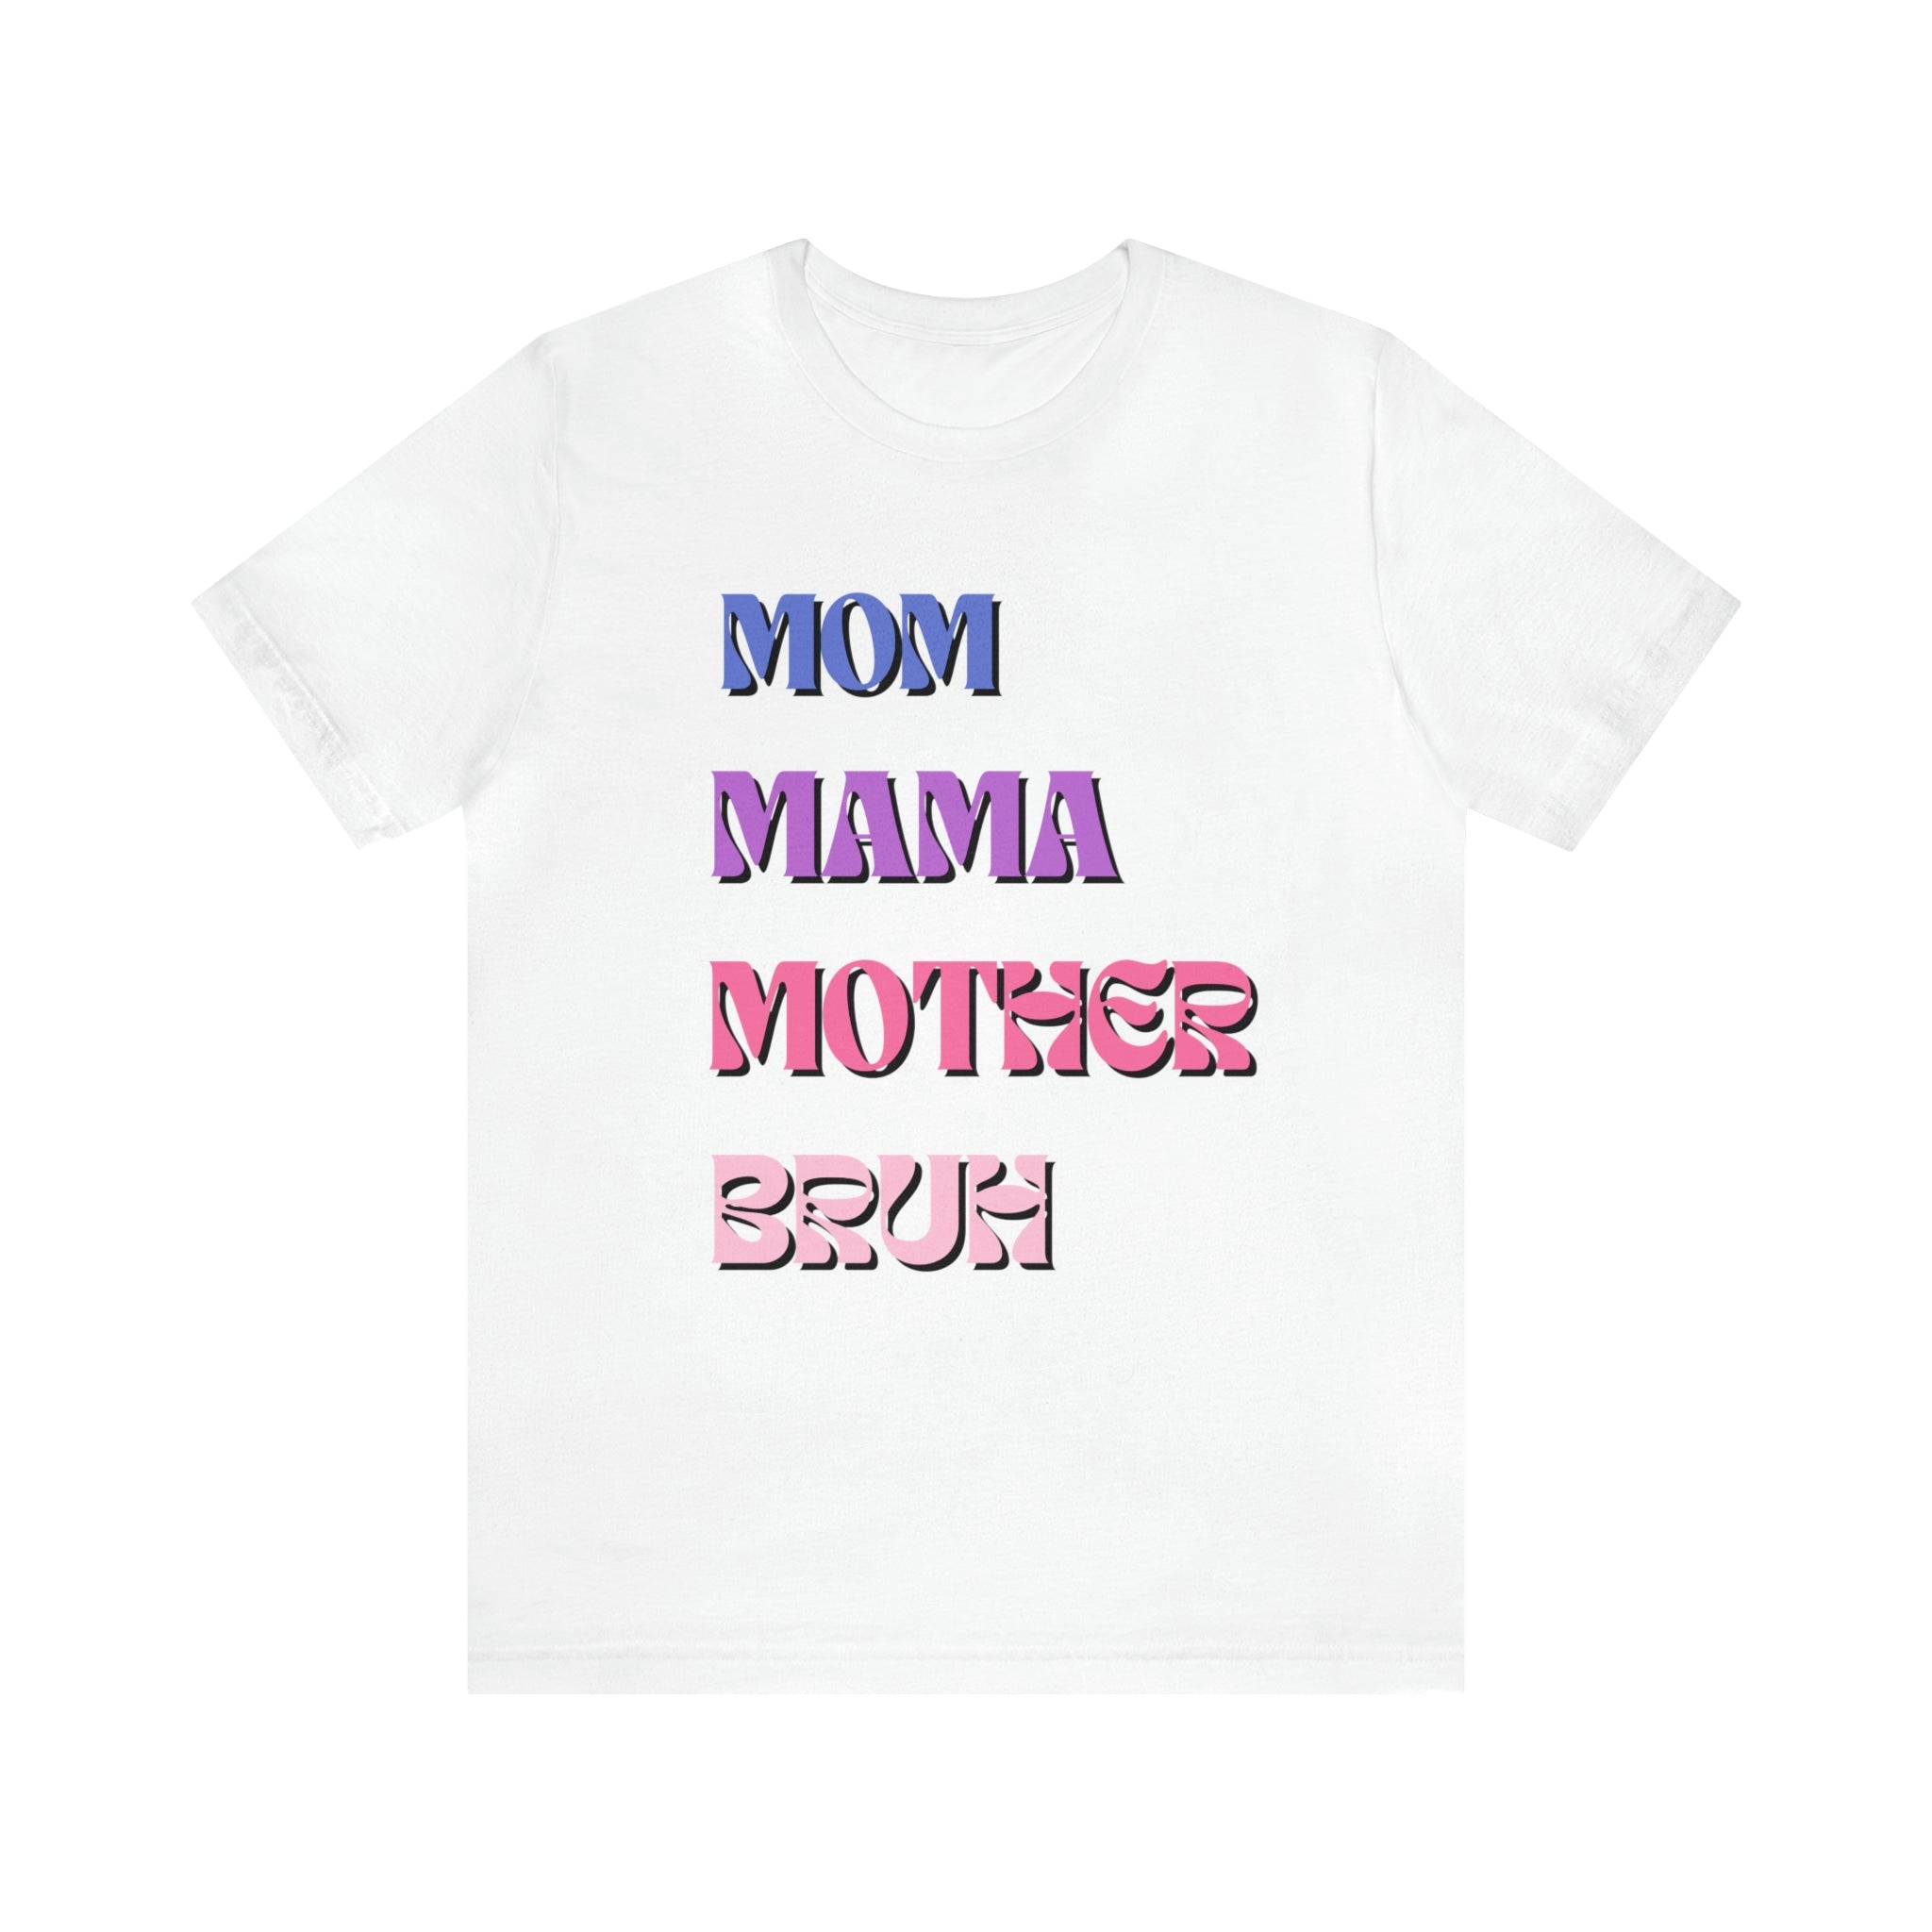 Mom, Mama, Mother, Bruh Women T-shirt